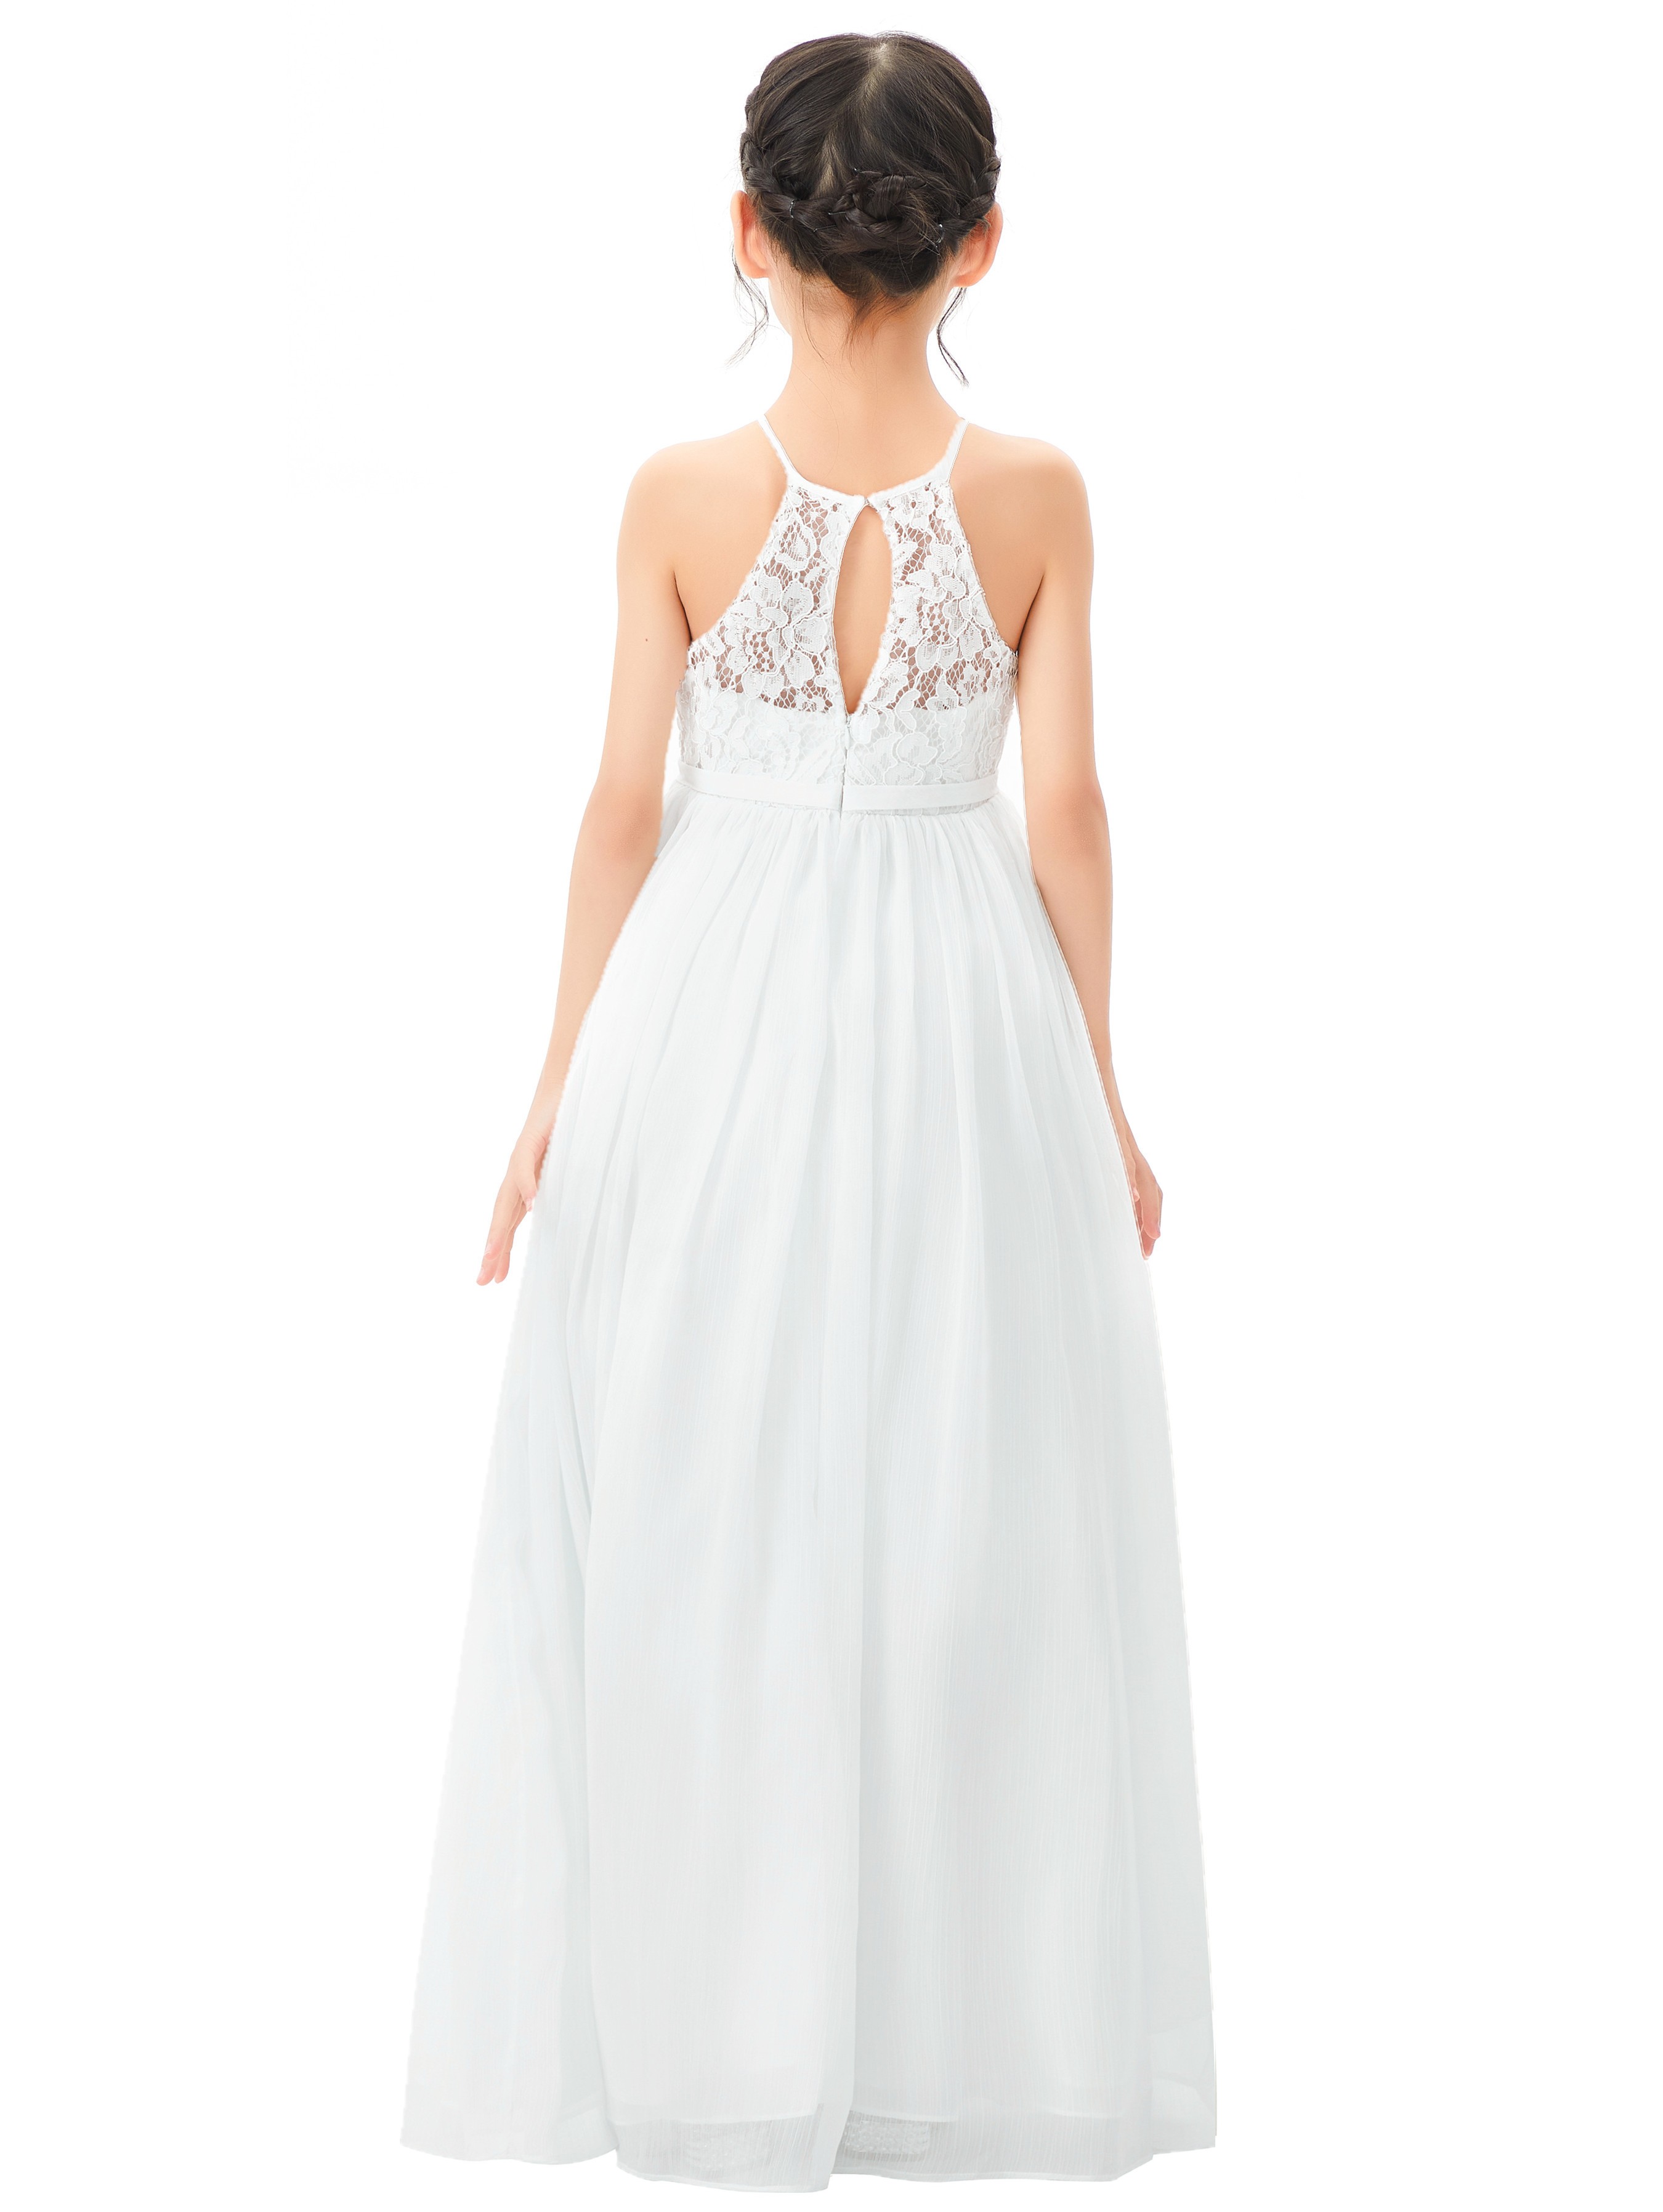 White Lace Halter Flower Girl Dress Lace Back Dress 332